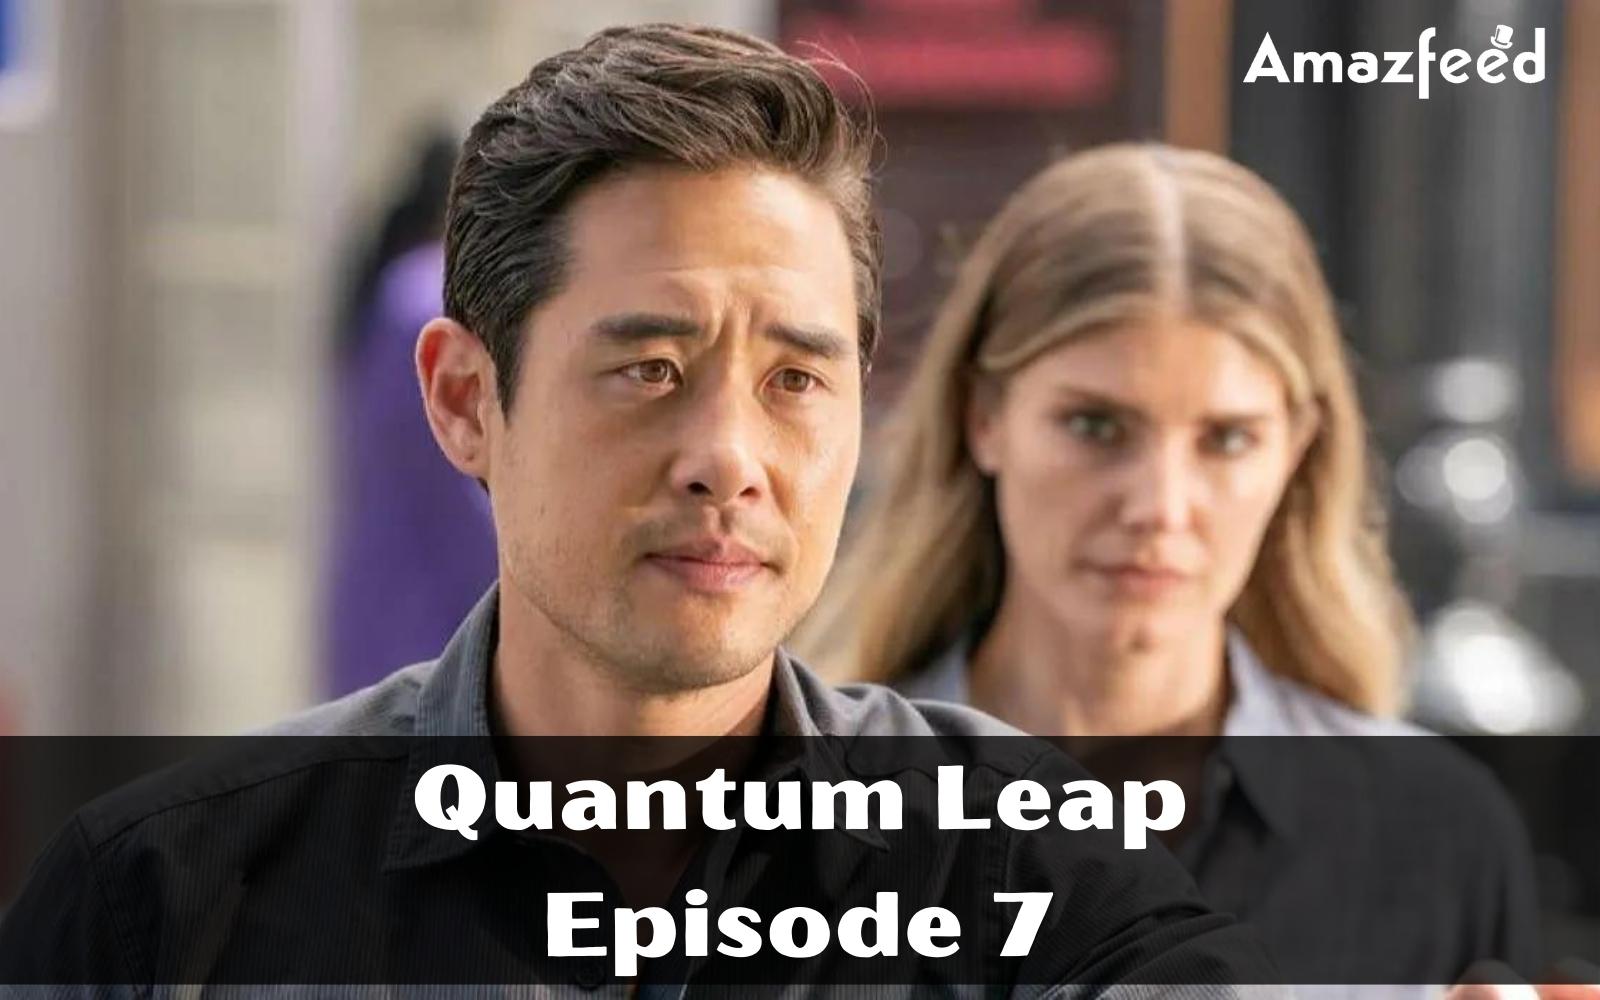 Quantum Leap Episode 7 ⇒ Spoilers, Countdown, Recap, Release Date, Cast & News Updates